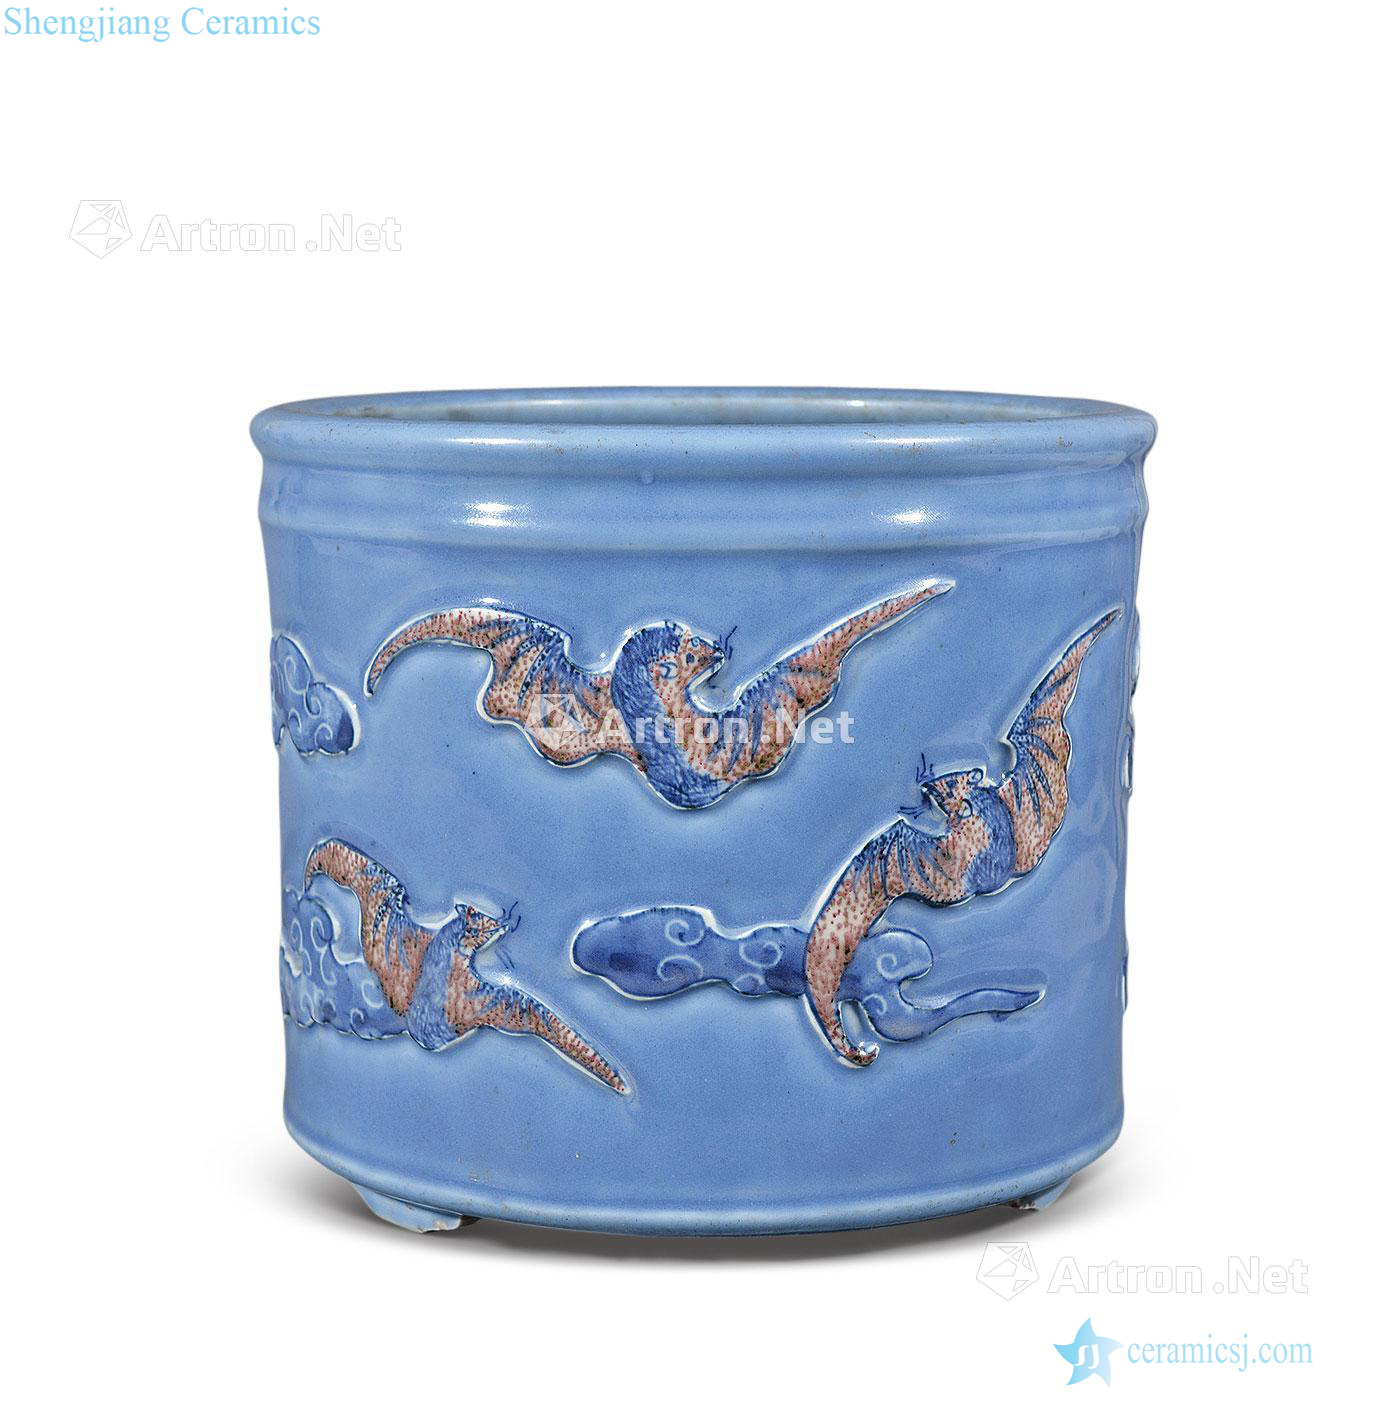 Clear blue, youligong GongWu bats incense burner